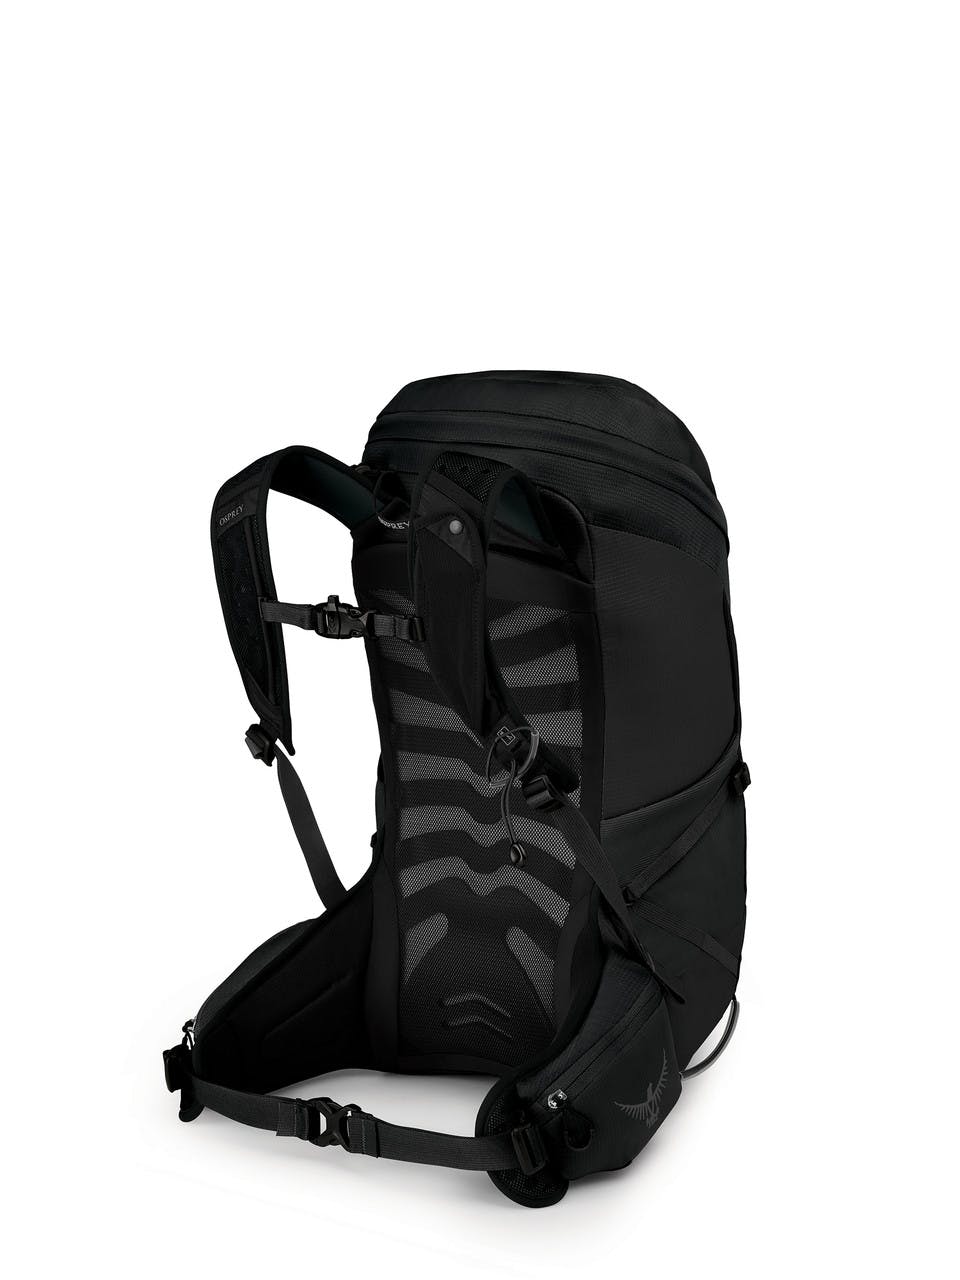 Talon 26 Backpack Stealth Black